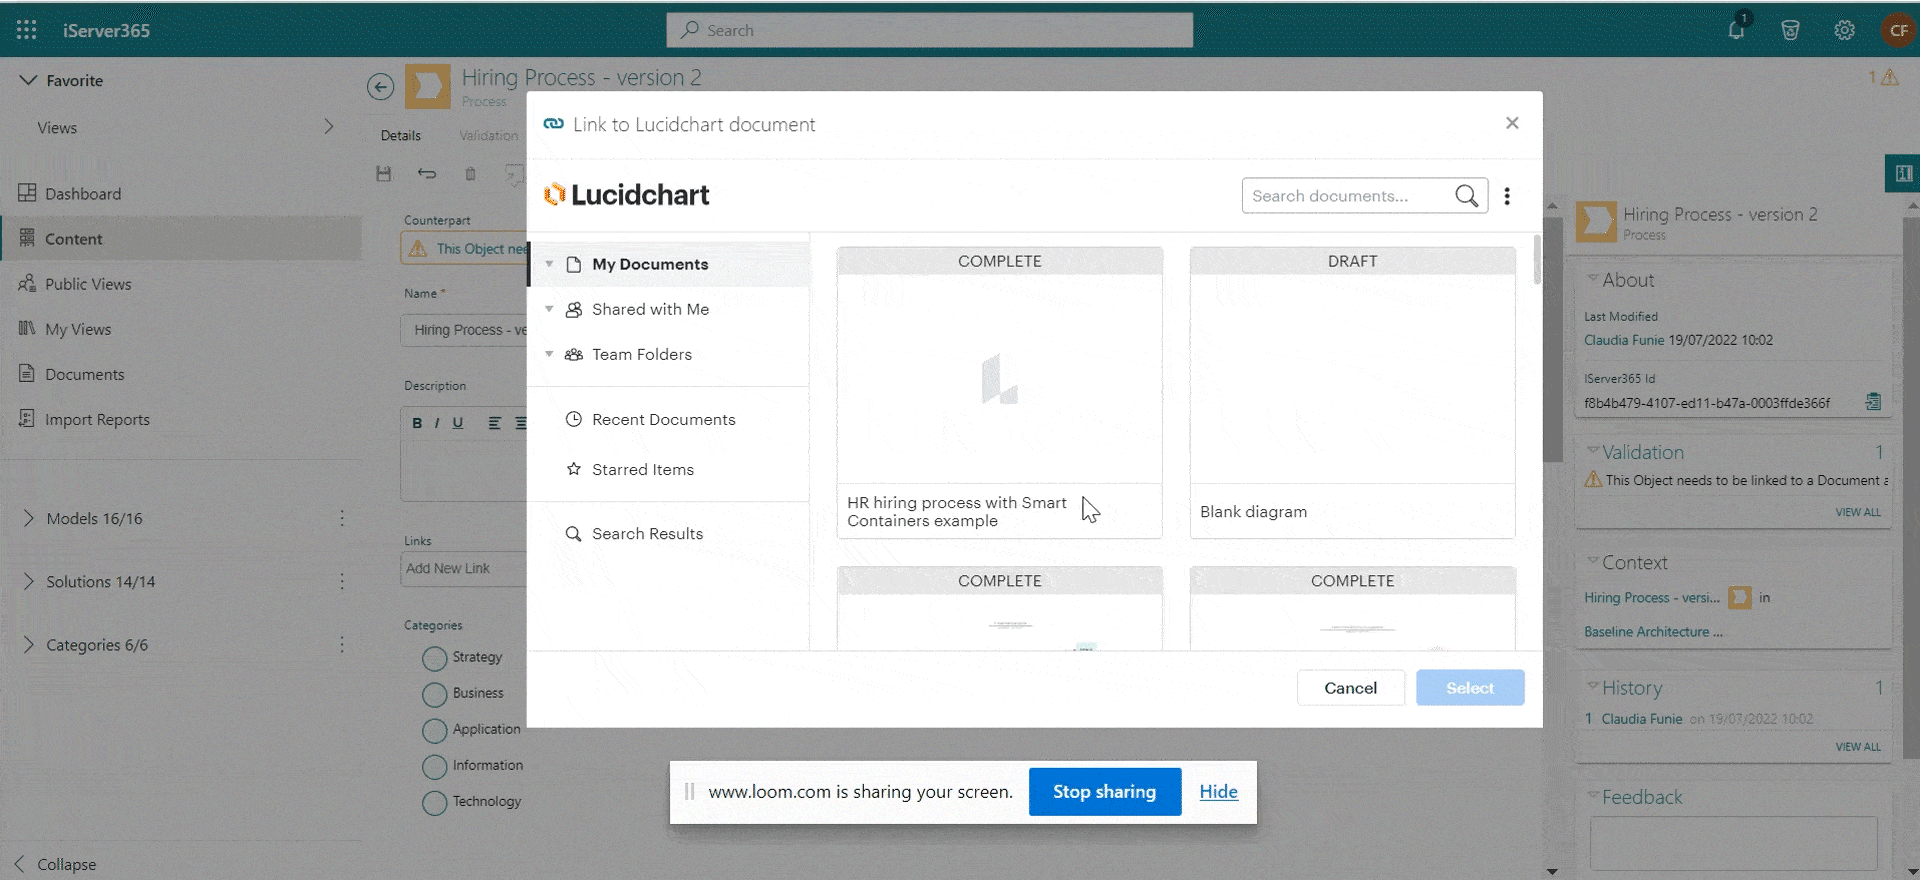 iServer365 integration with Lucidchart